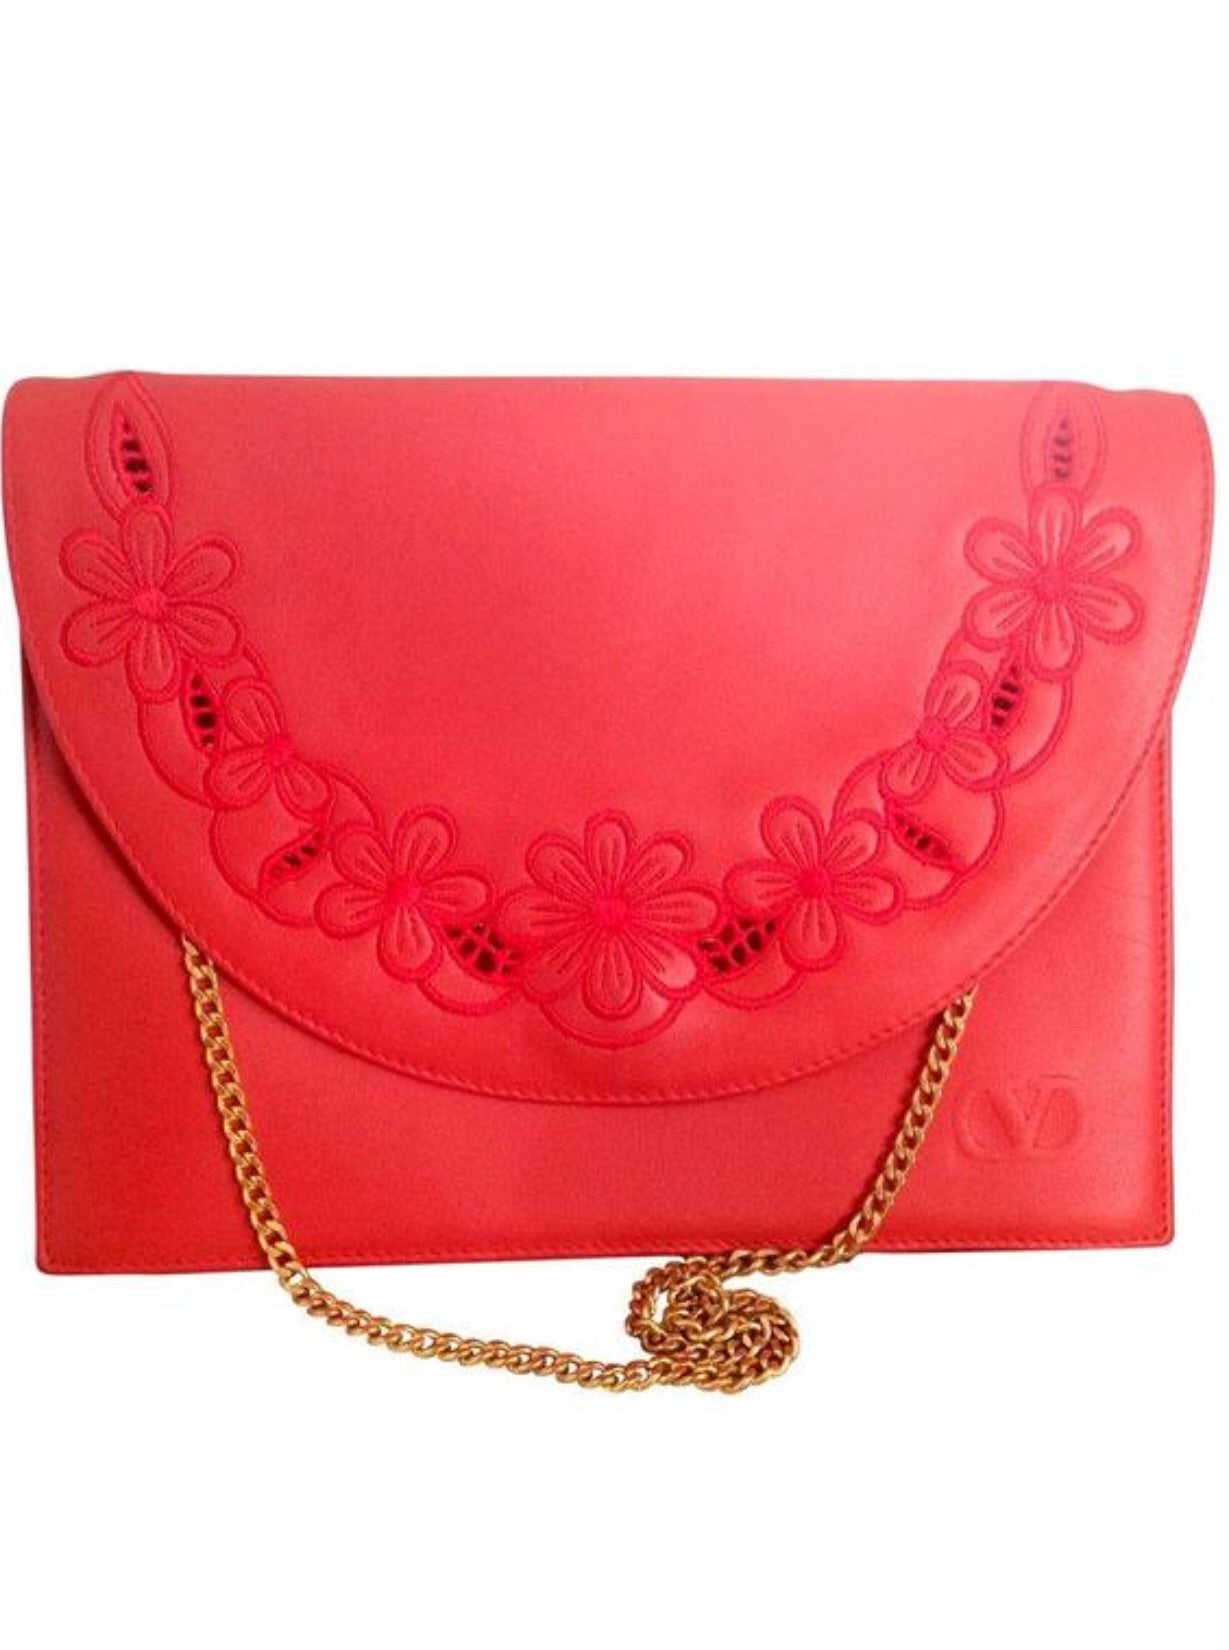 Mario Valentino | Bags | New With Tag Mario Valentino Handbag Purse  Pocketbook Red With Studs | Poshmark